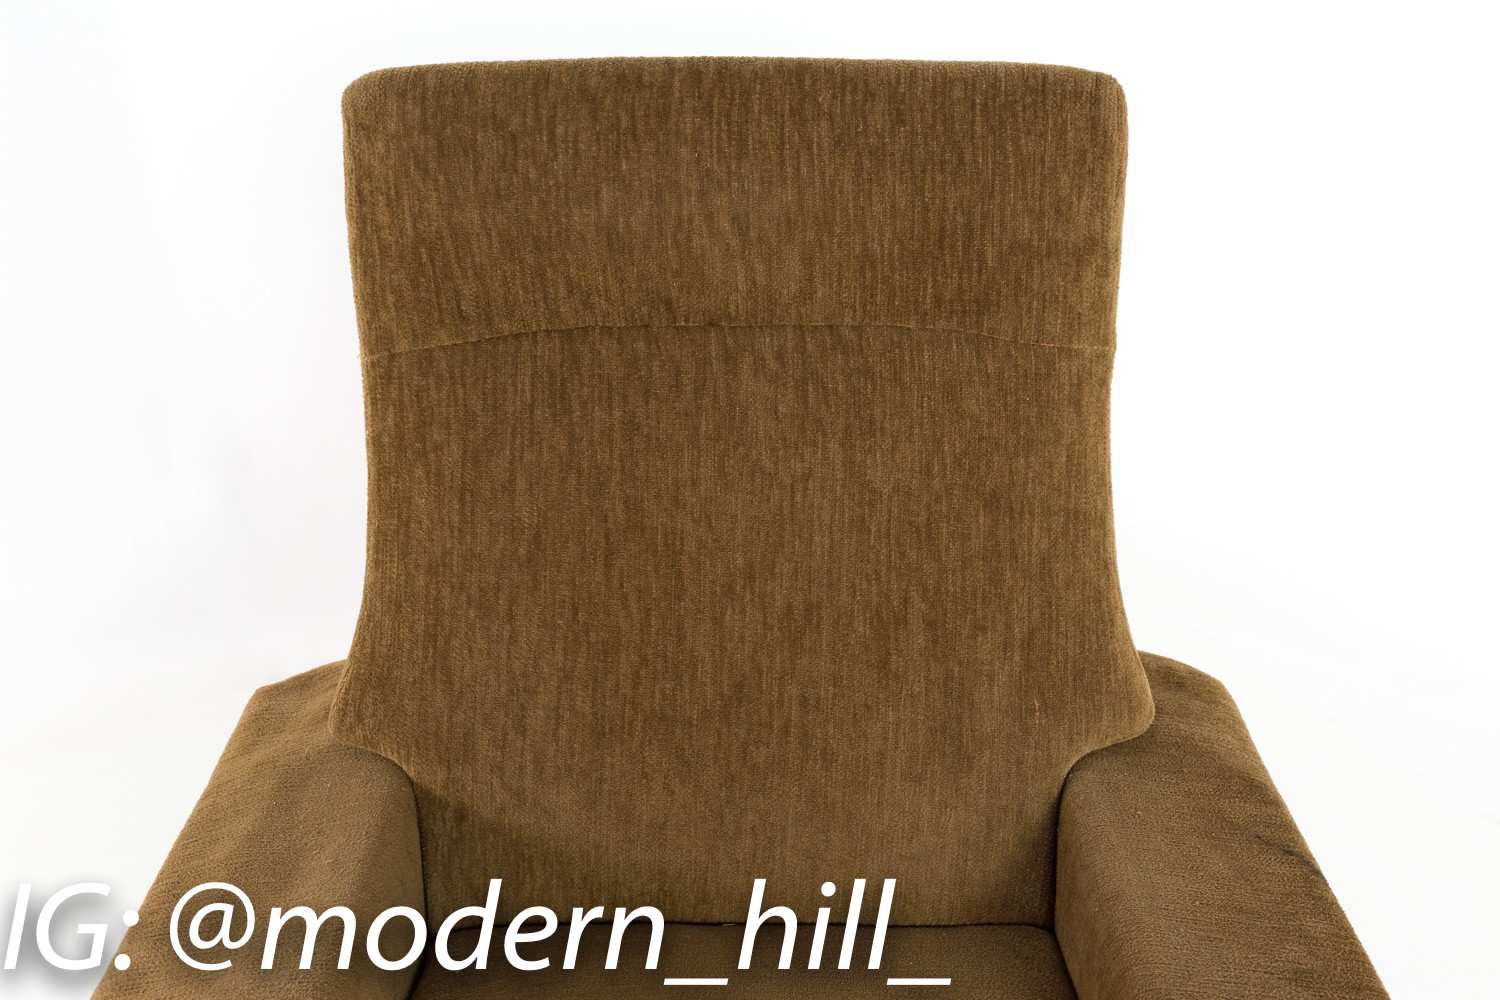 Johannes Andersen for Trensum Capri Mid Century Highback Lounge Chair